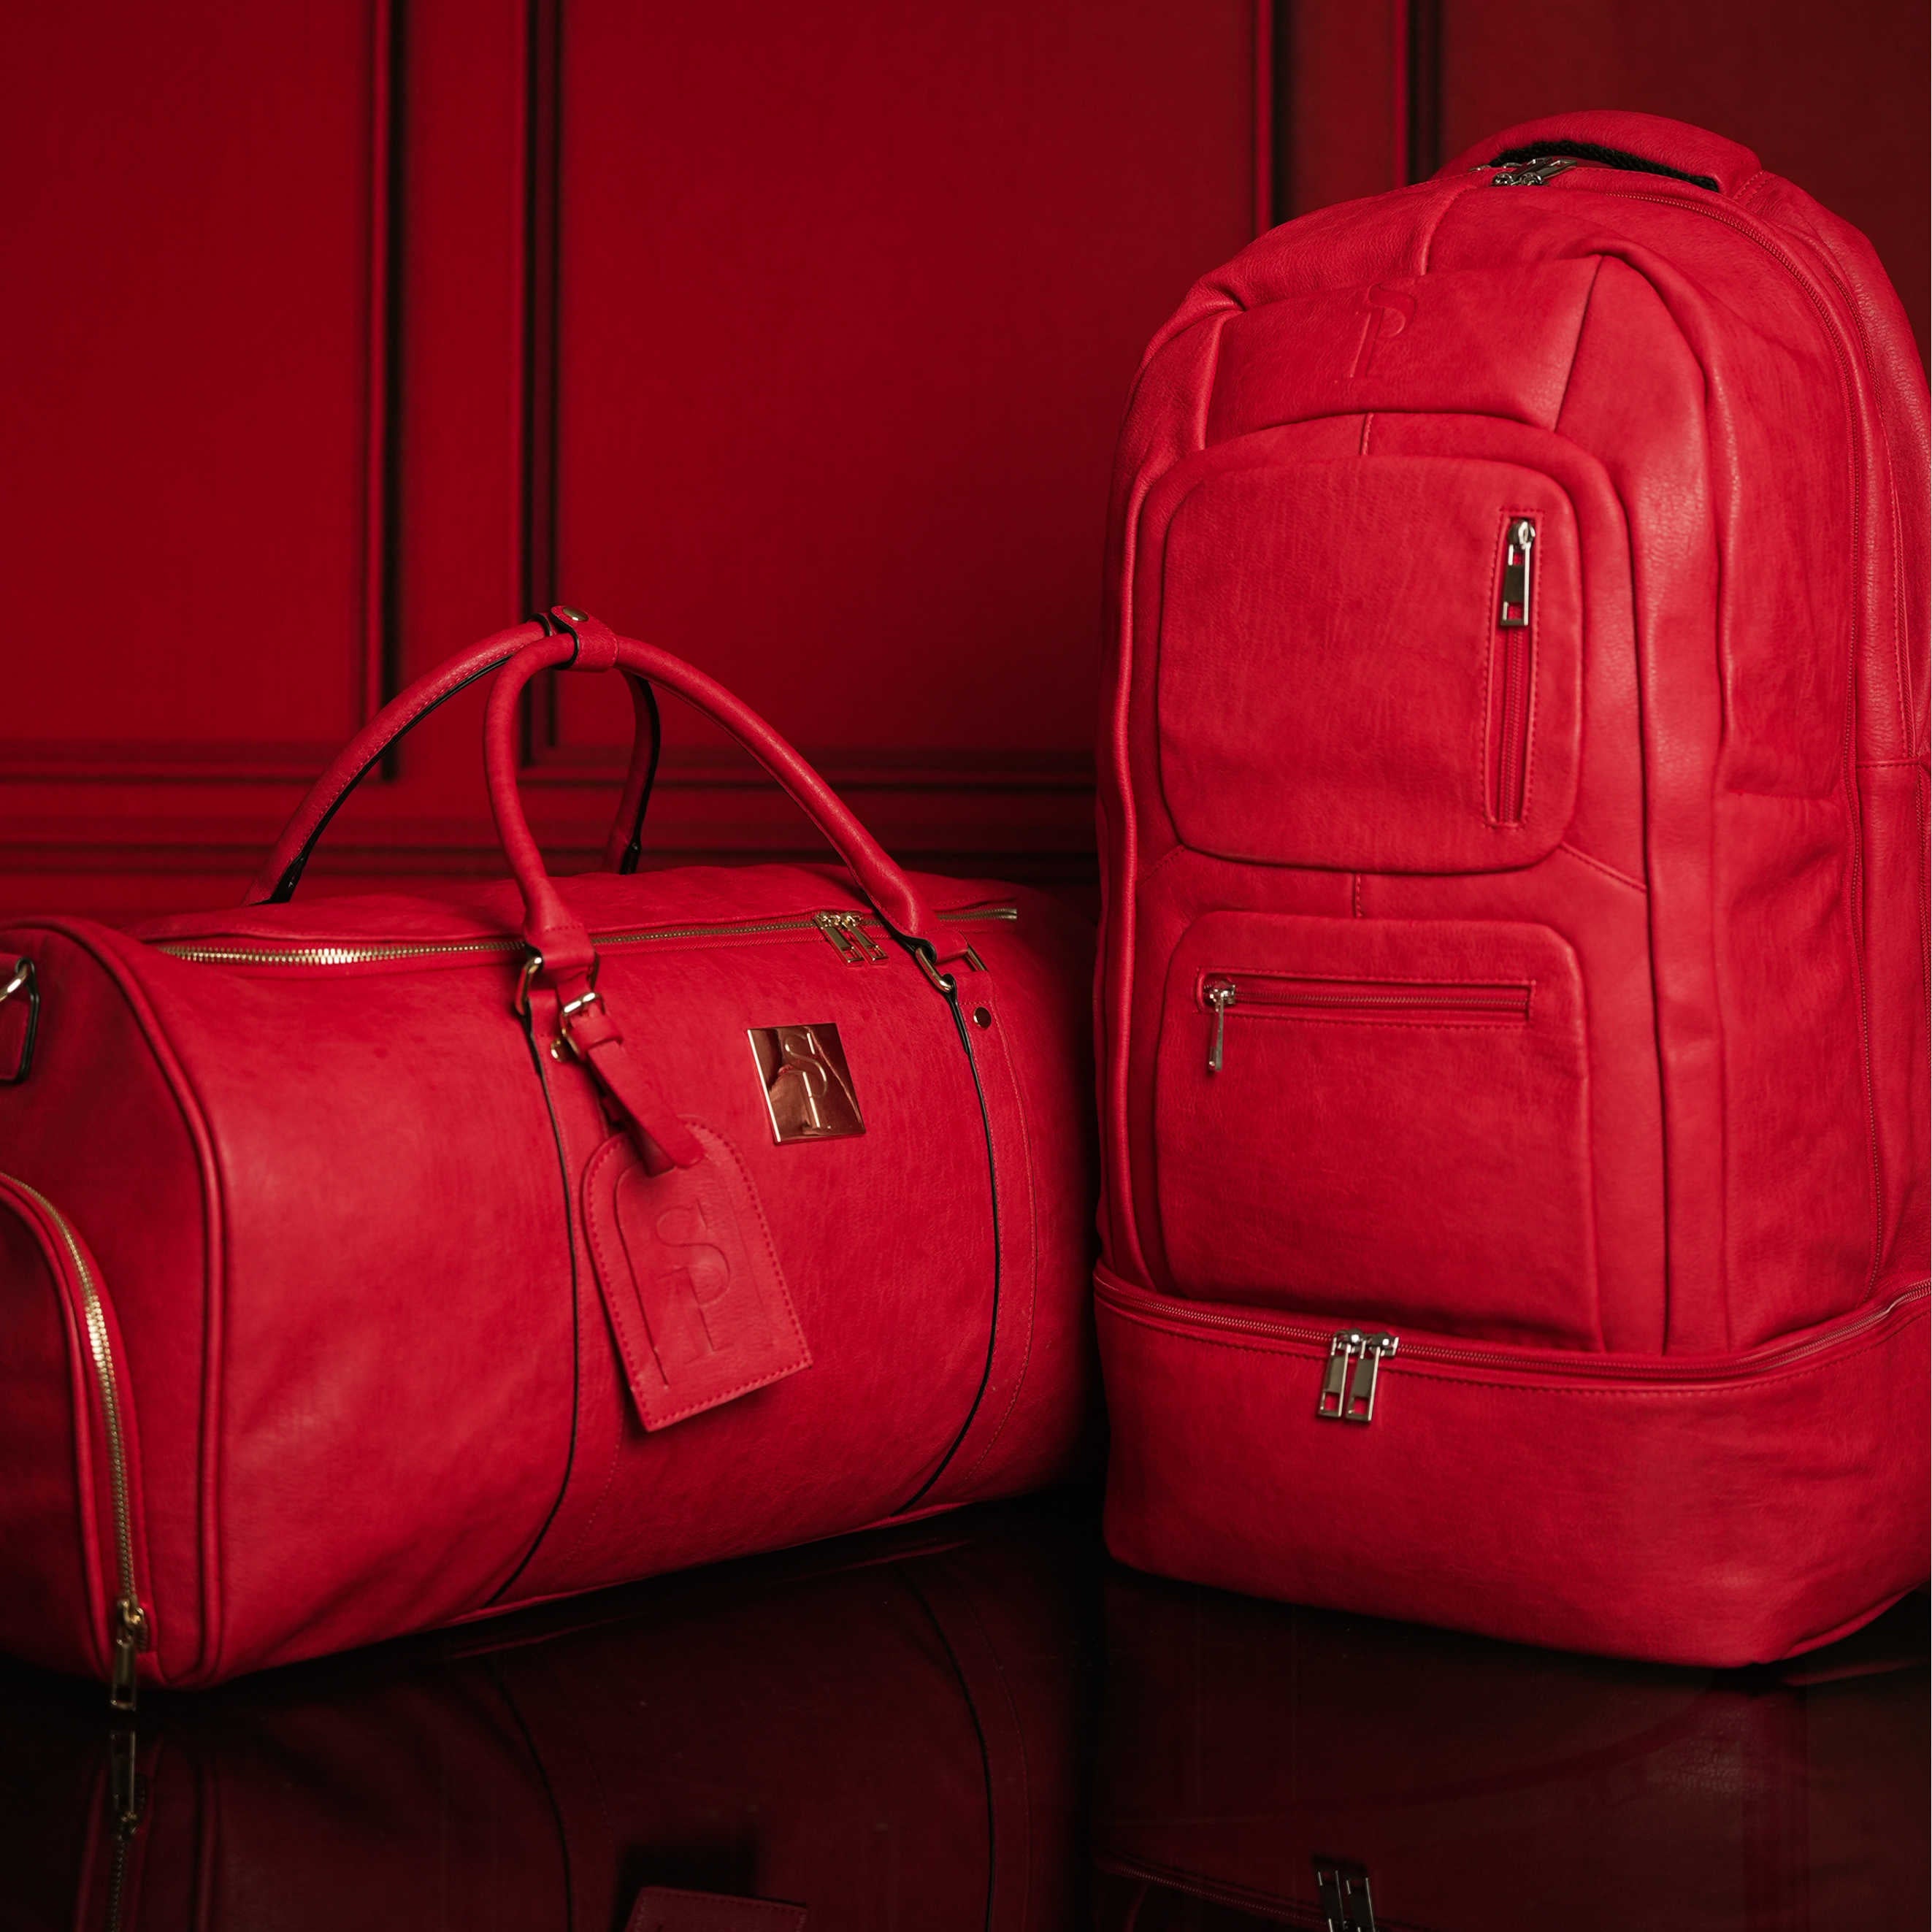 Red Tumbled Leather Signature Bag Set (Signature and Duffle Bag) - Sole Premise